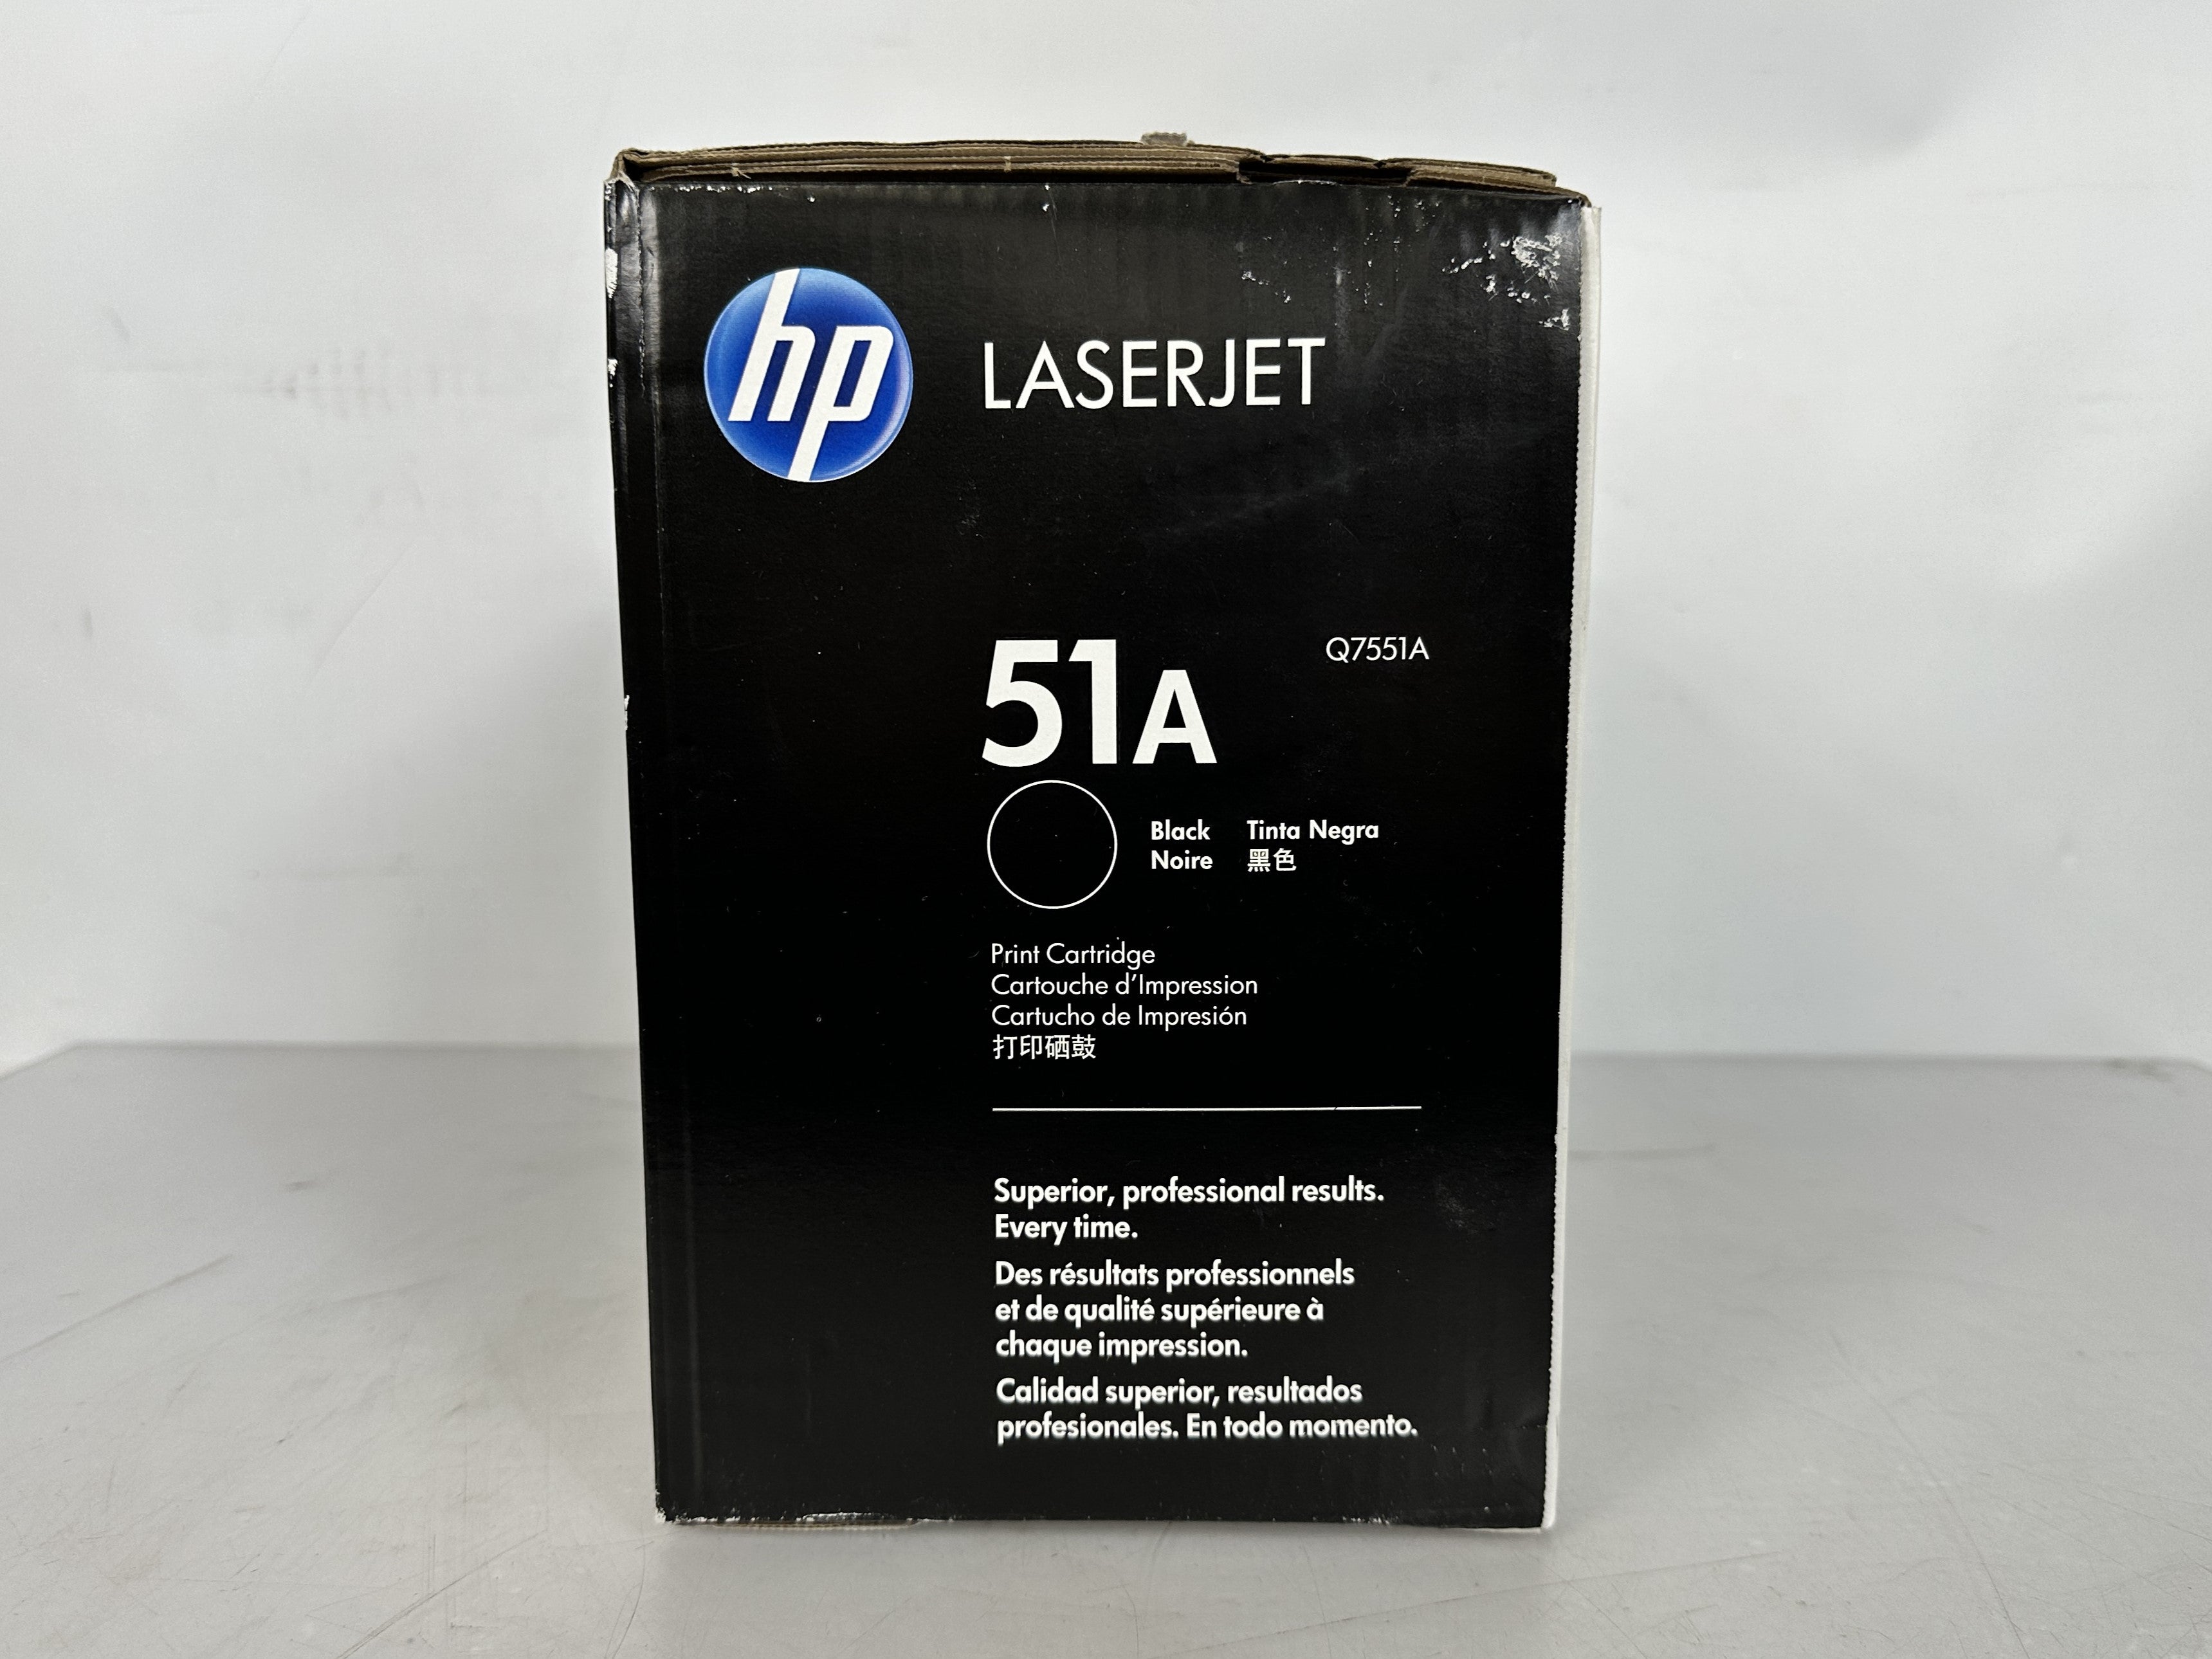 HP LaserJet 51A Q7551A Black Toner Cartridge